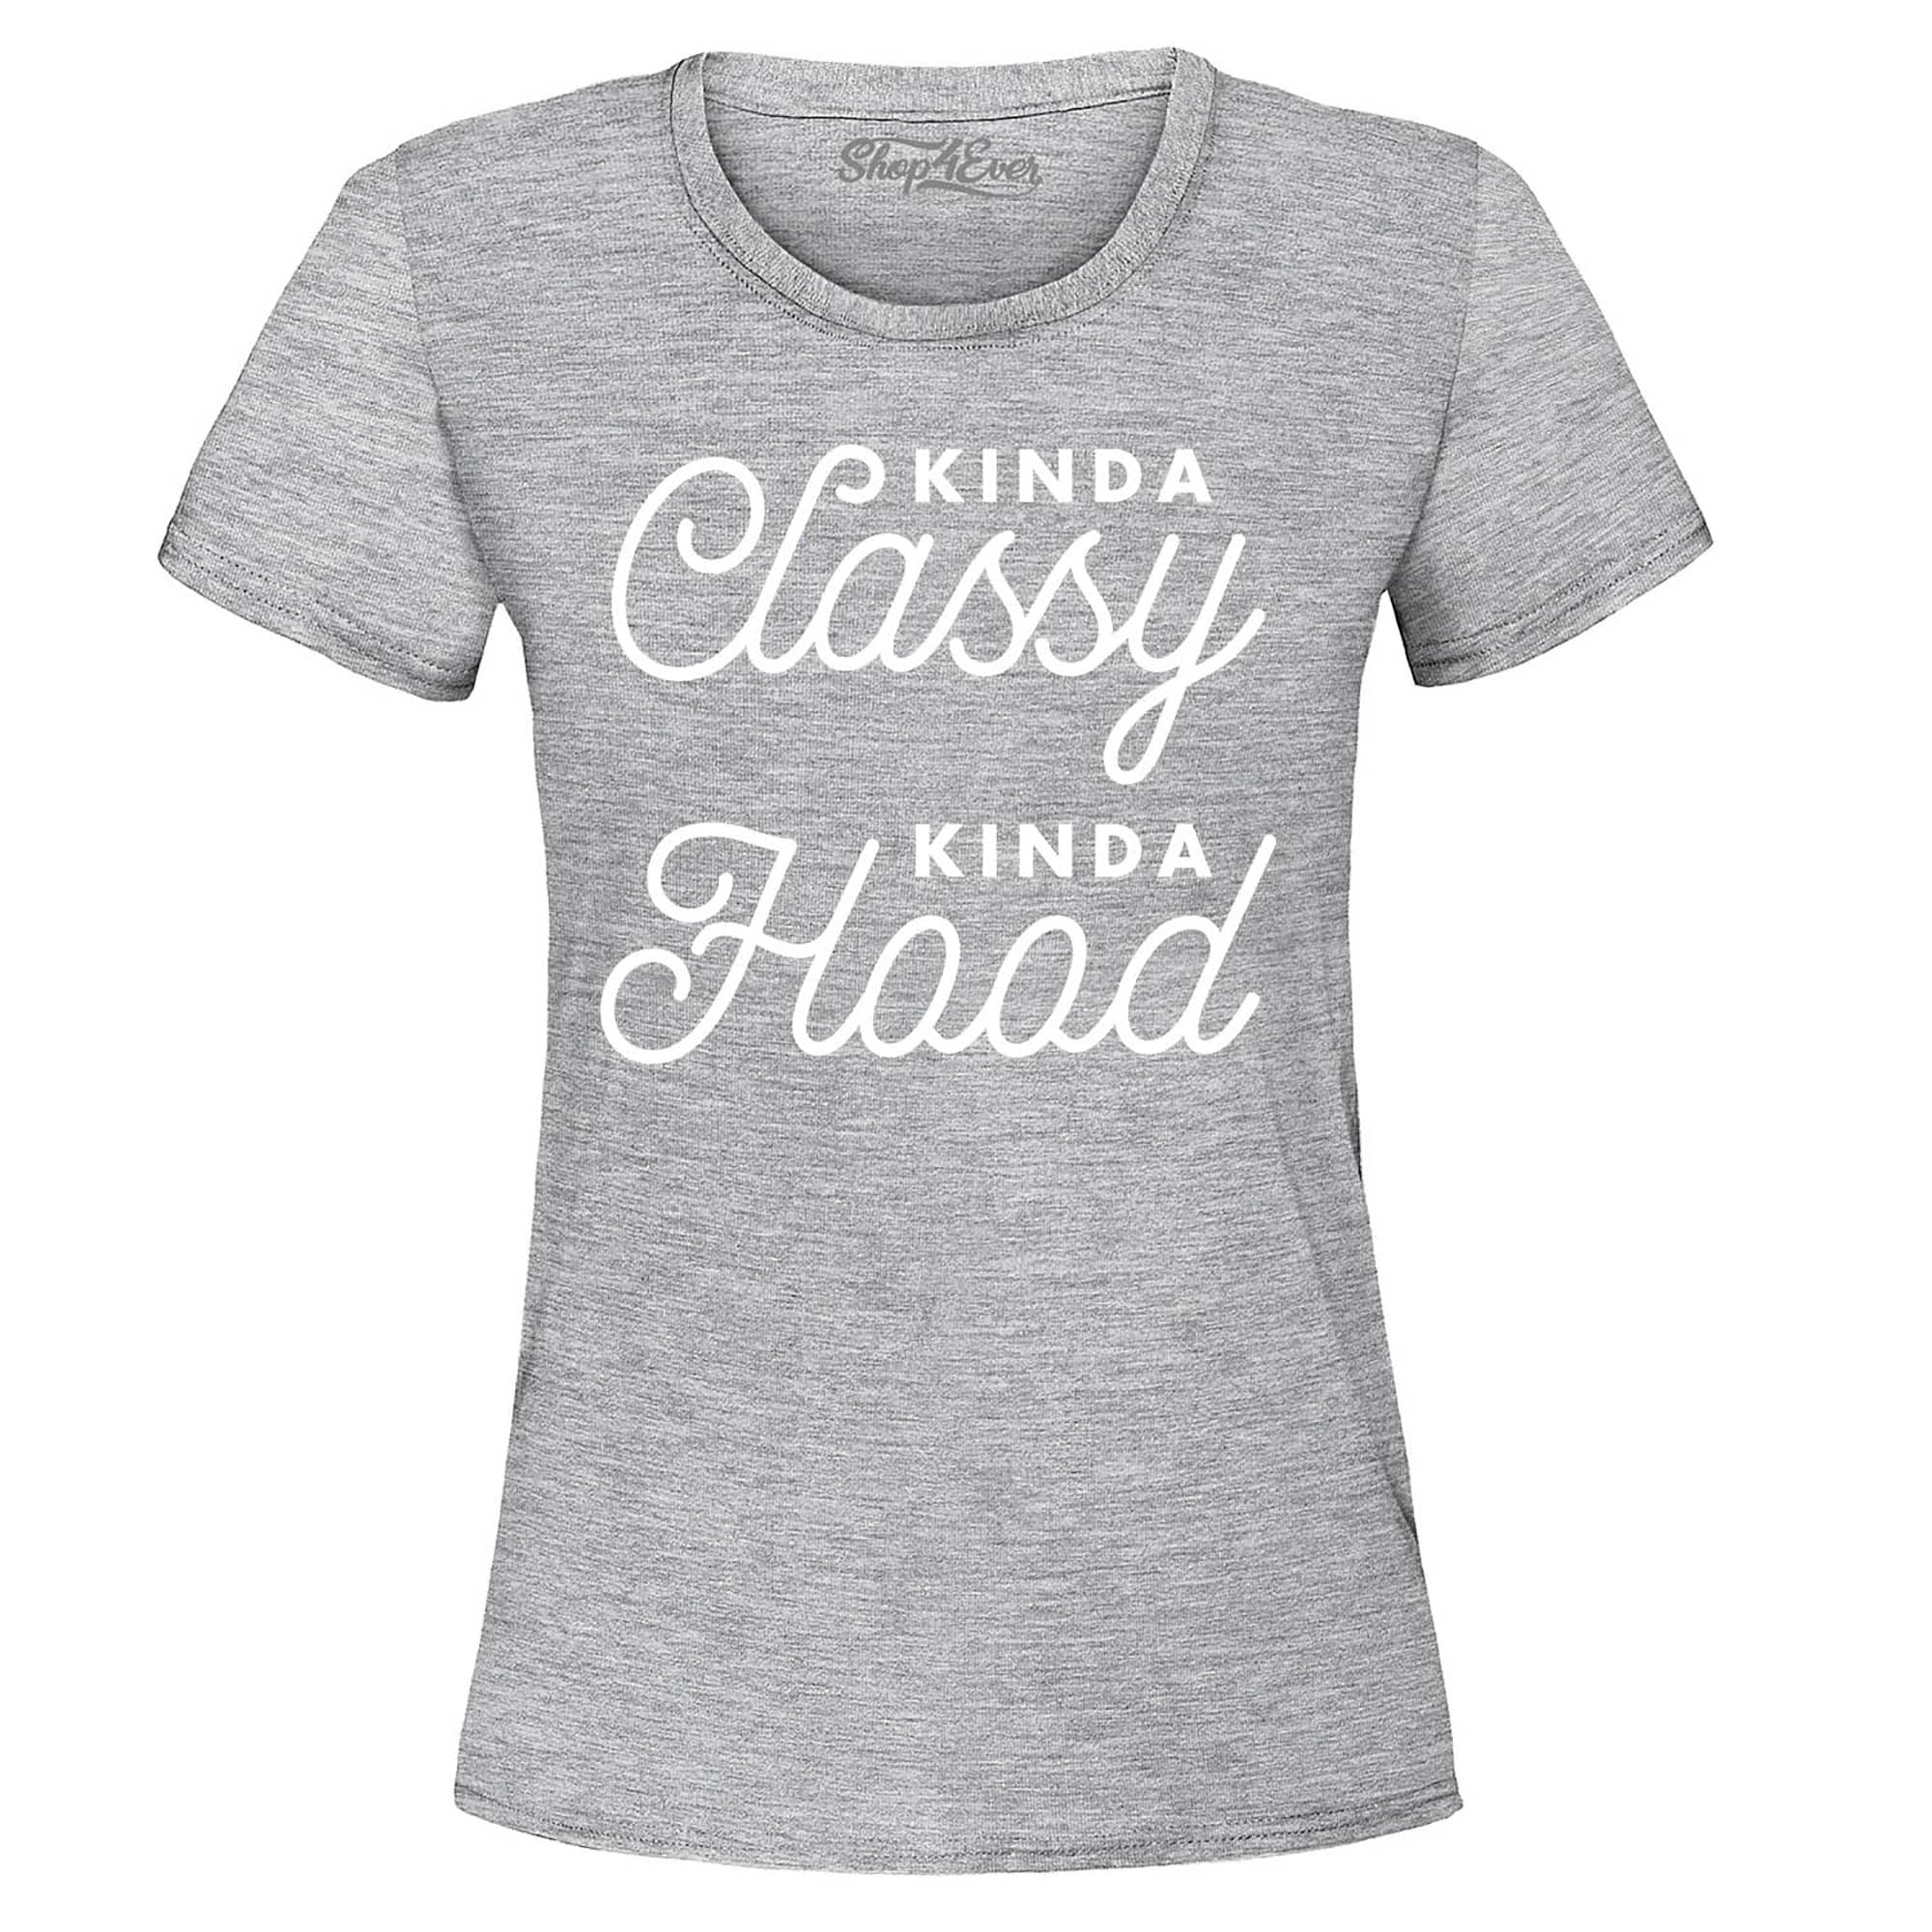 Kinda Classy Kinda Hood Women's T-Shirt